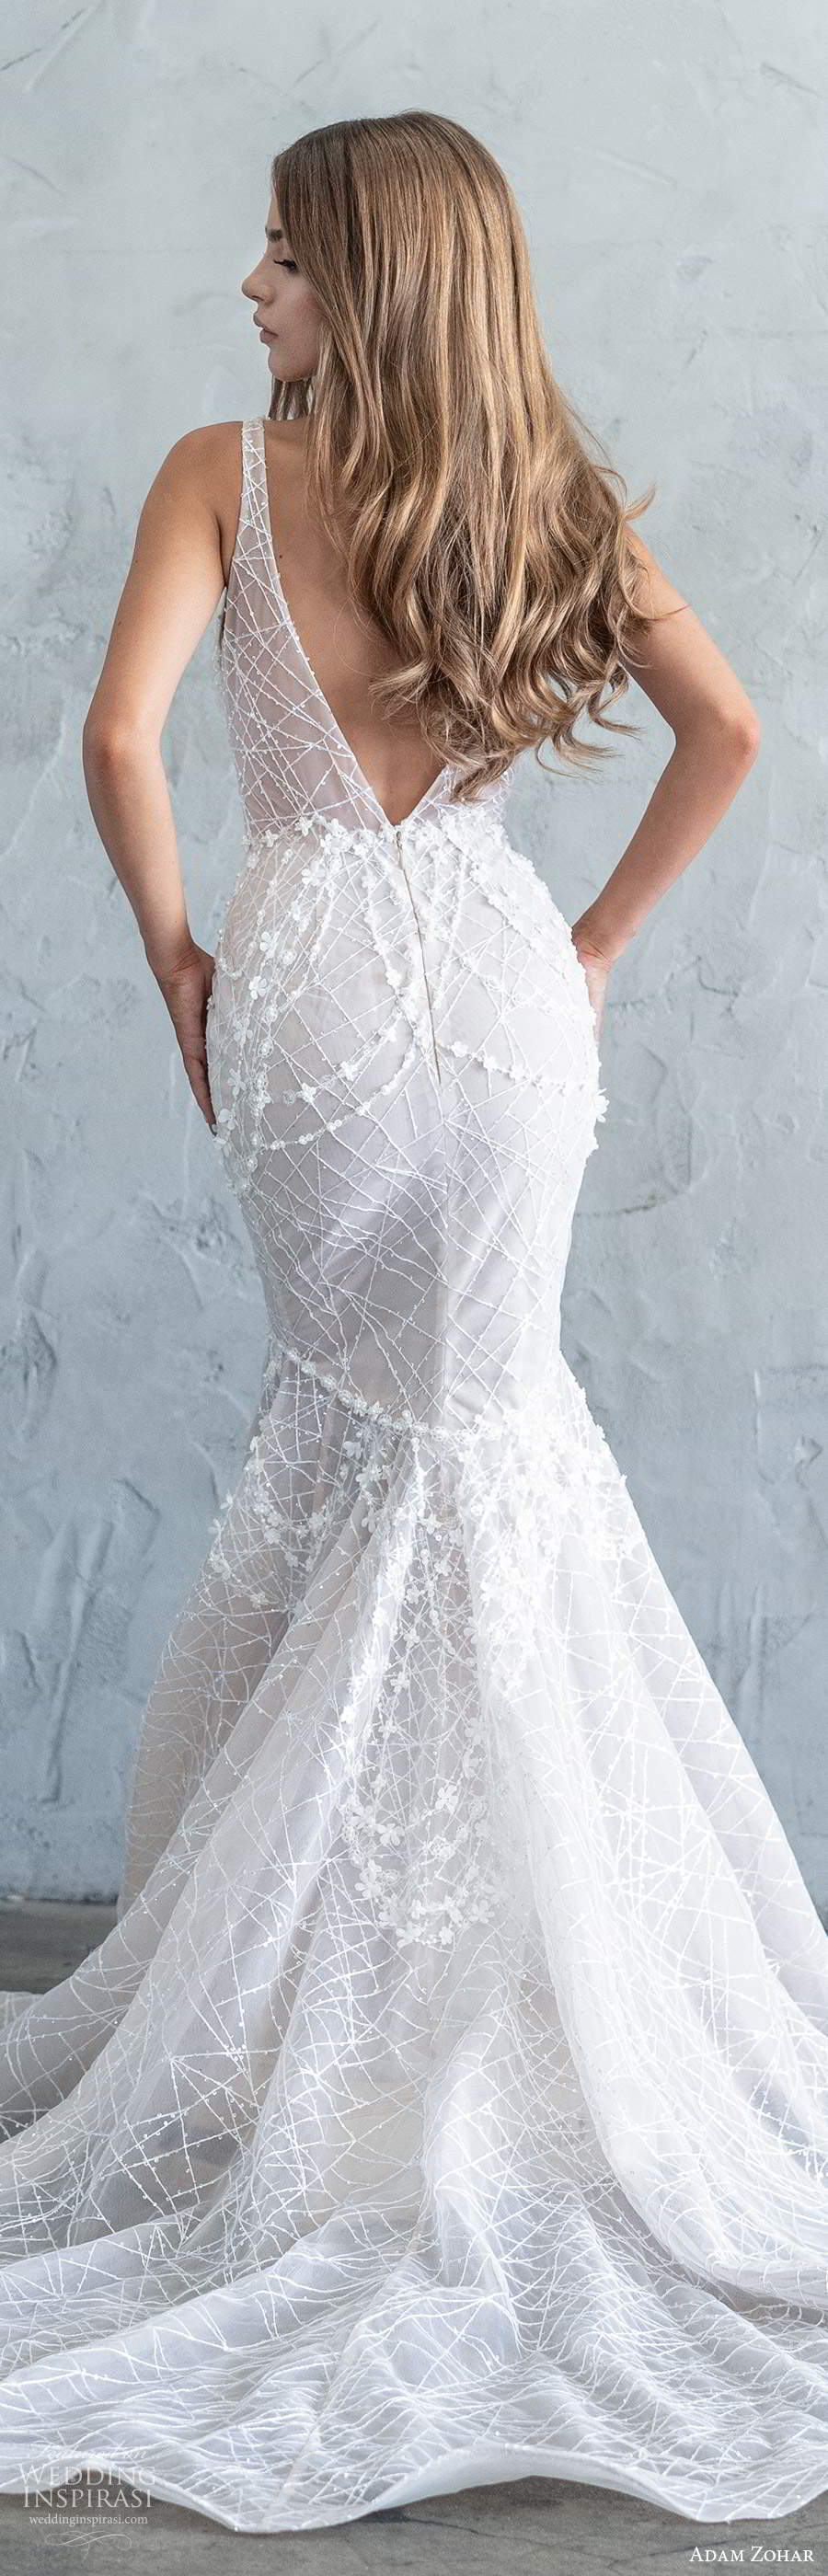 adam zohar fall 2020 bridal sleeveless straps plunging v neckline fully embellished mermaid wedding dress chapel train (9) lbv